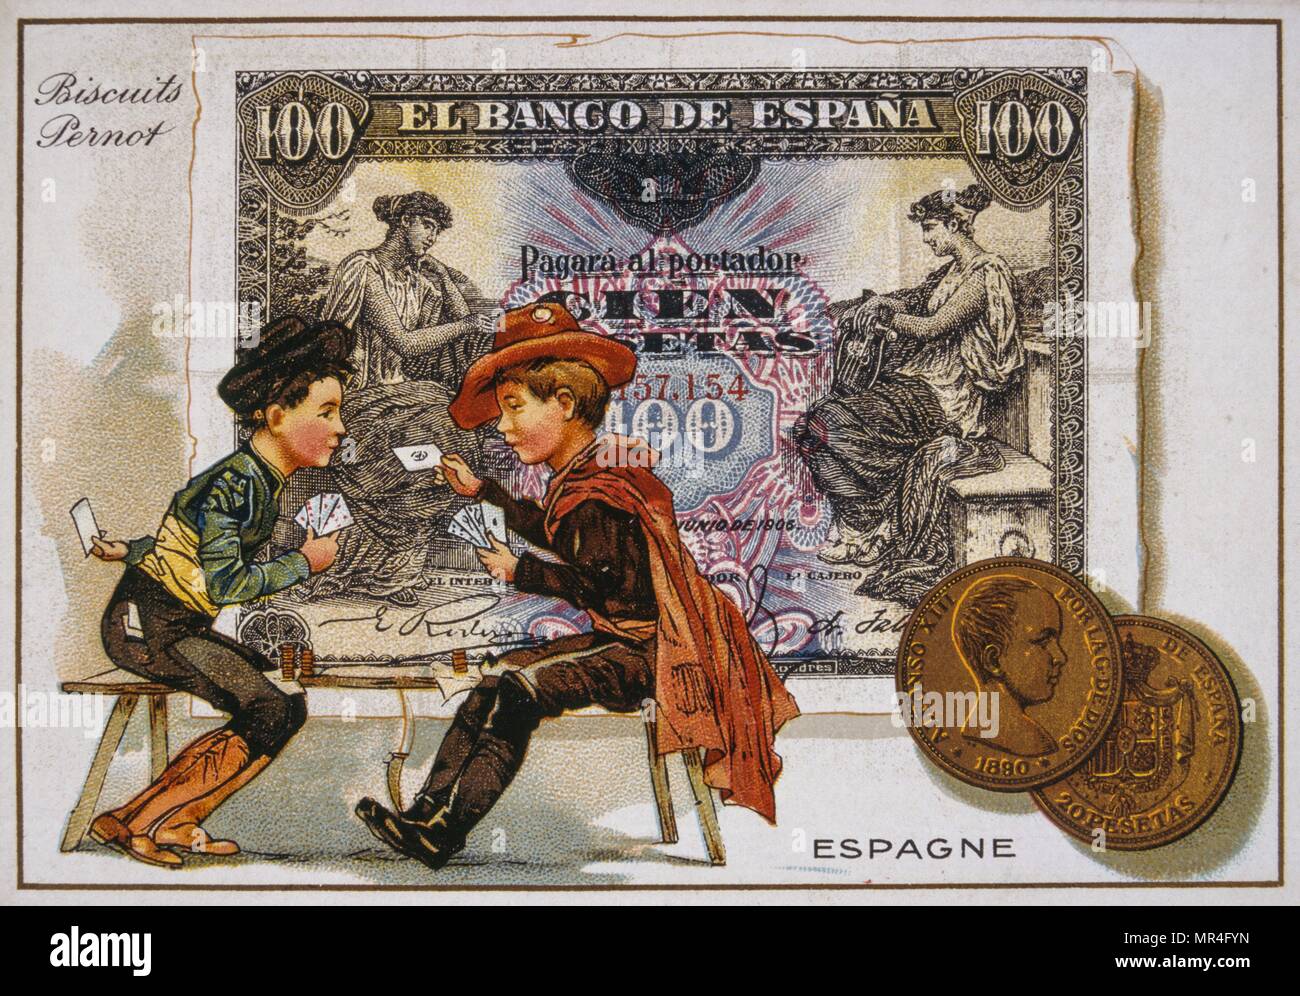 Cartolina francese del 1900 raffigurante due scheda medievale giocatori contro un 100 pesetas banconota Foto Stock